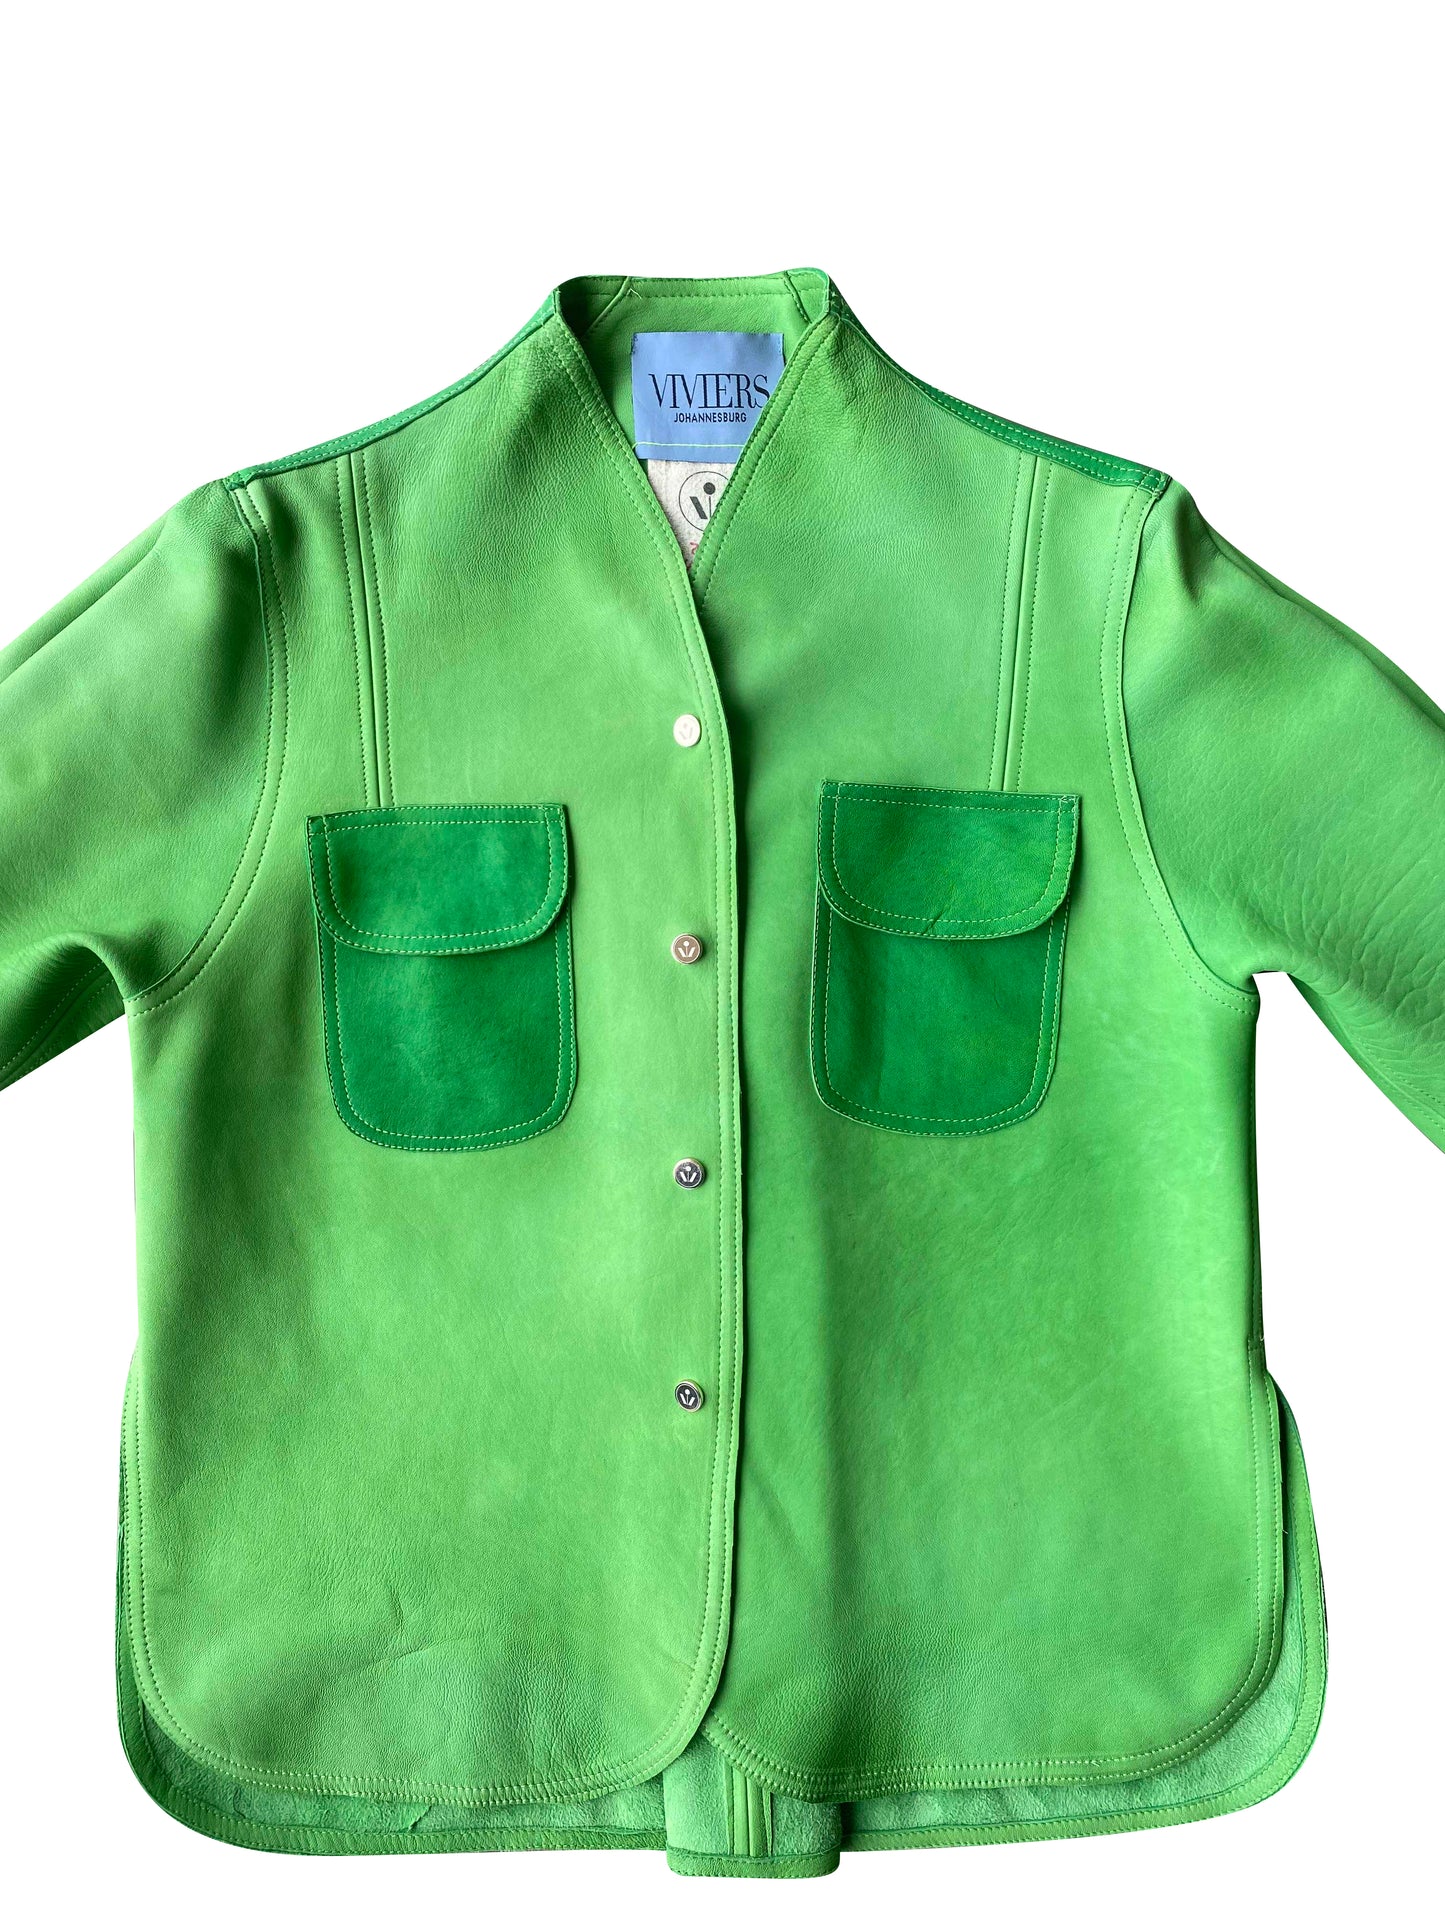 Glimmering Green Shirt